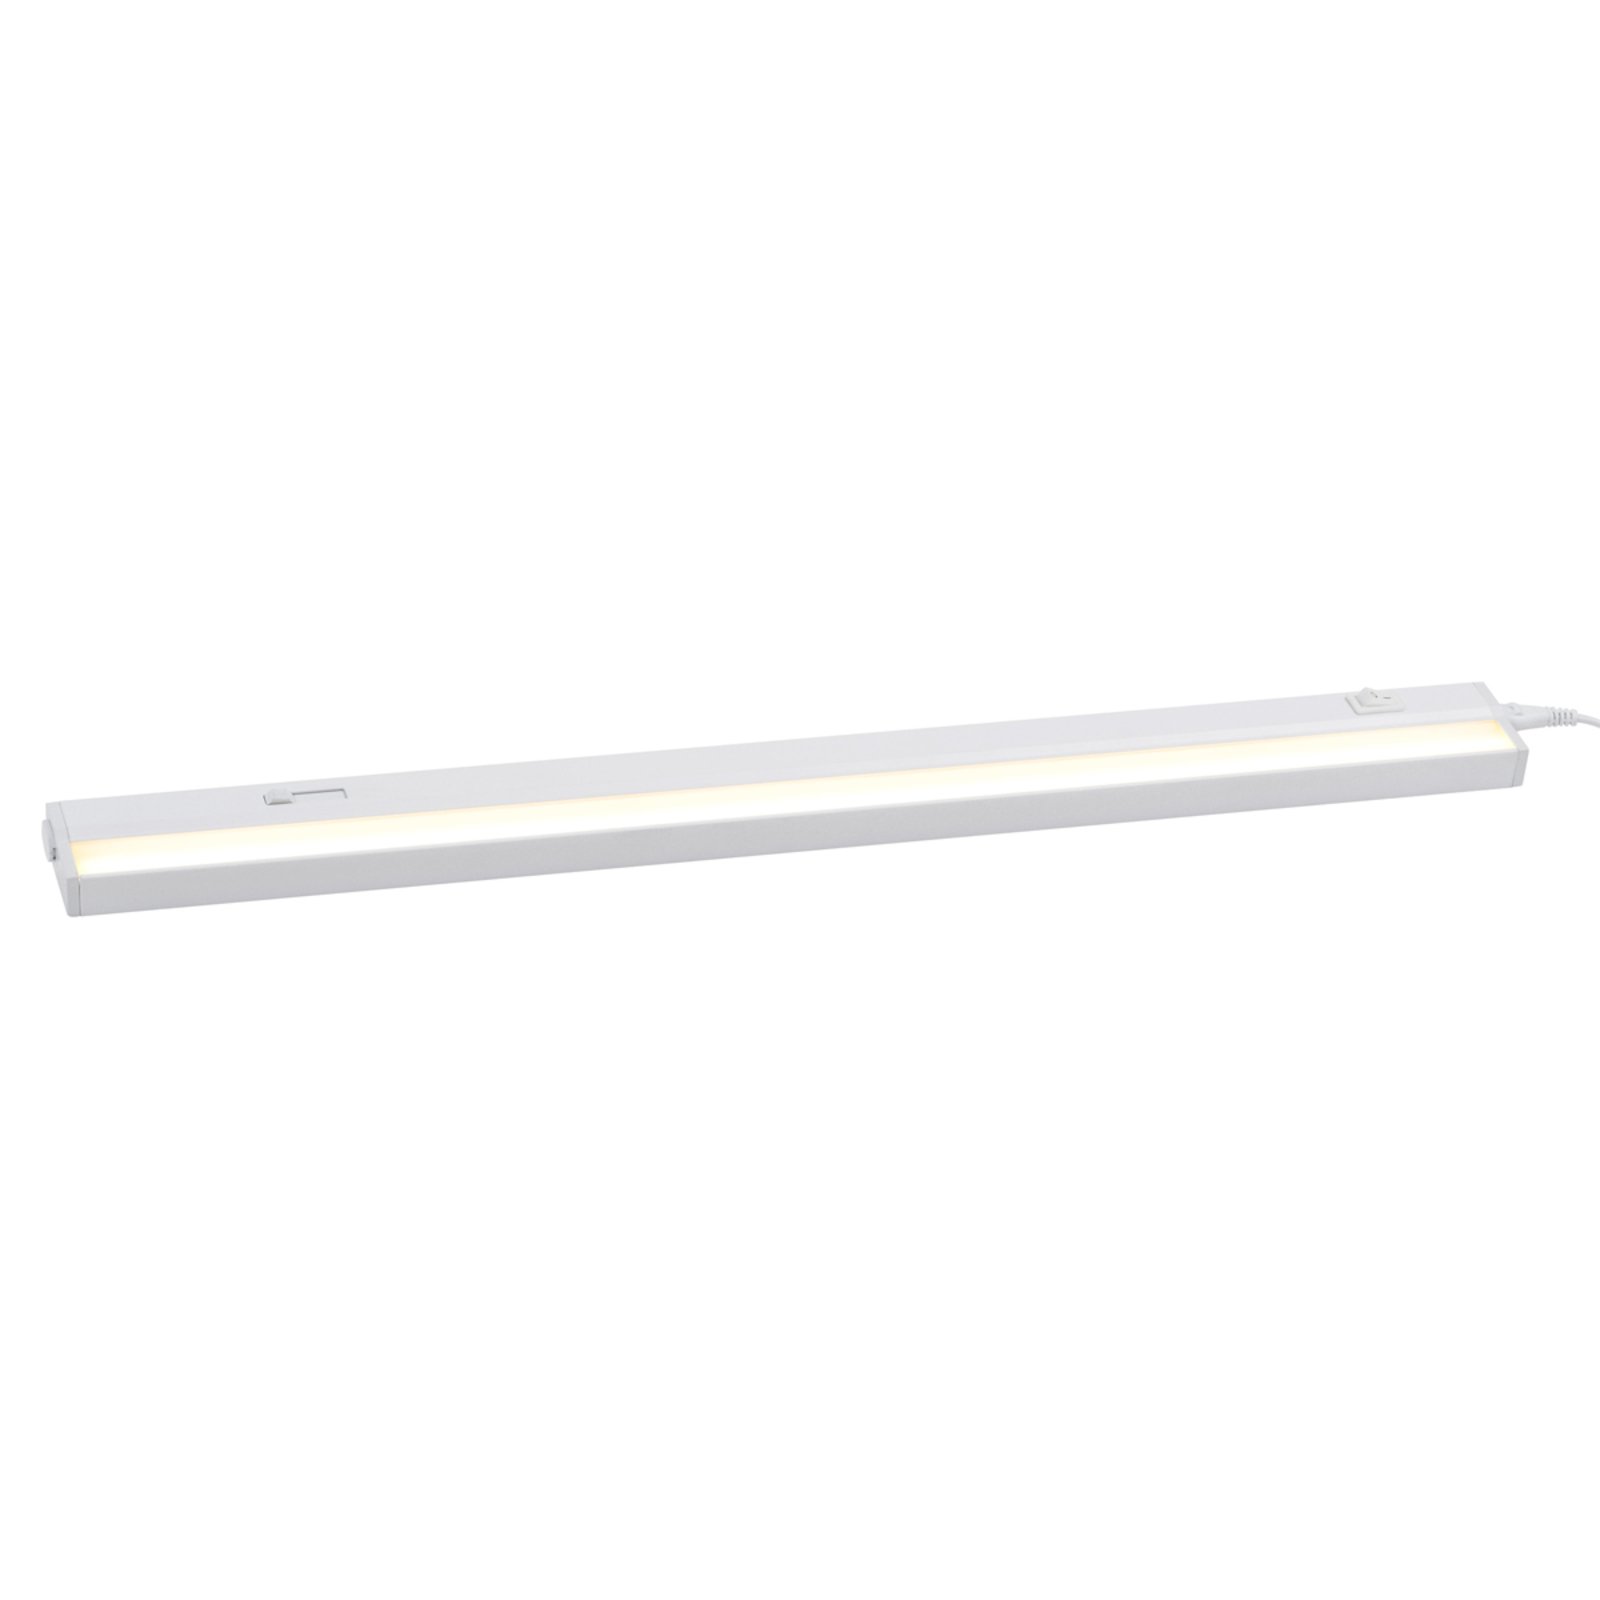 LED-Unterschranklampe Cabinet light Länge 60,9 cm